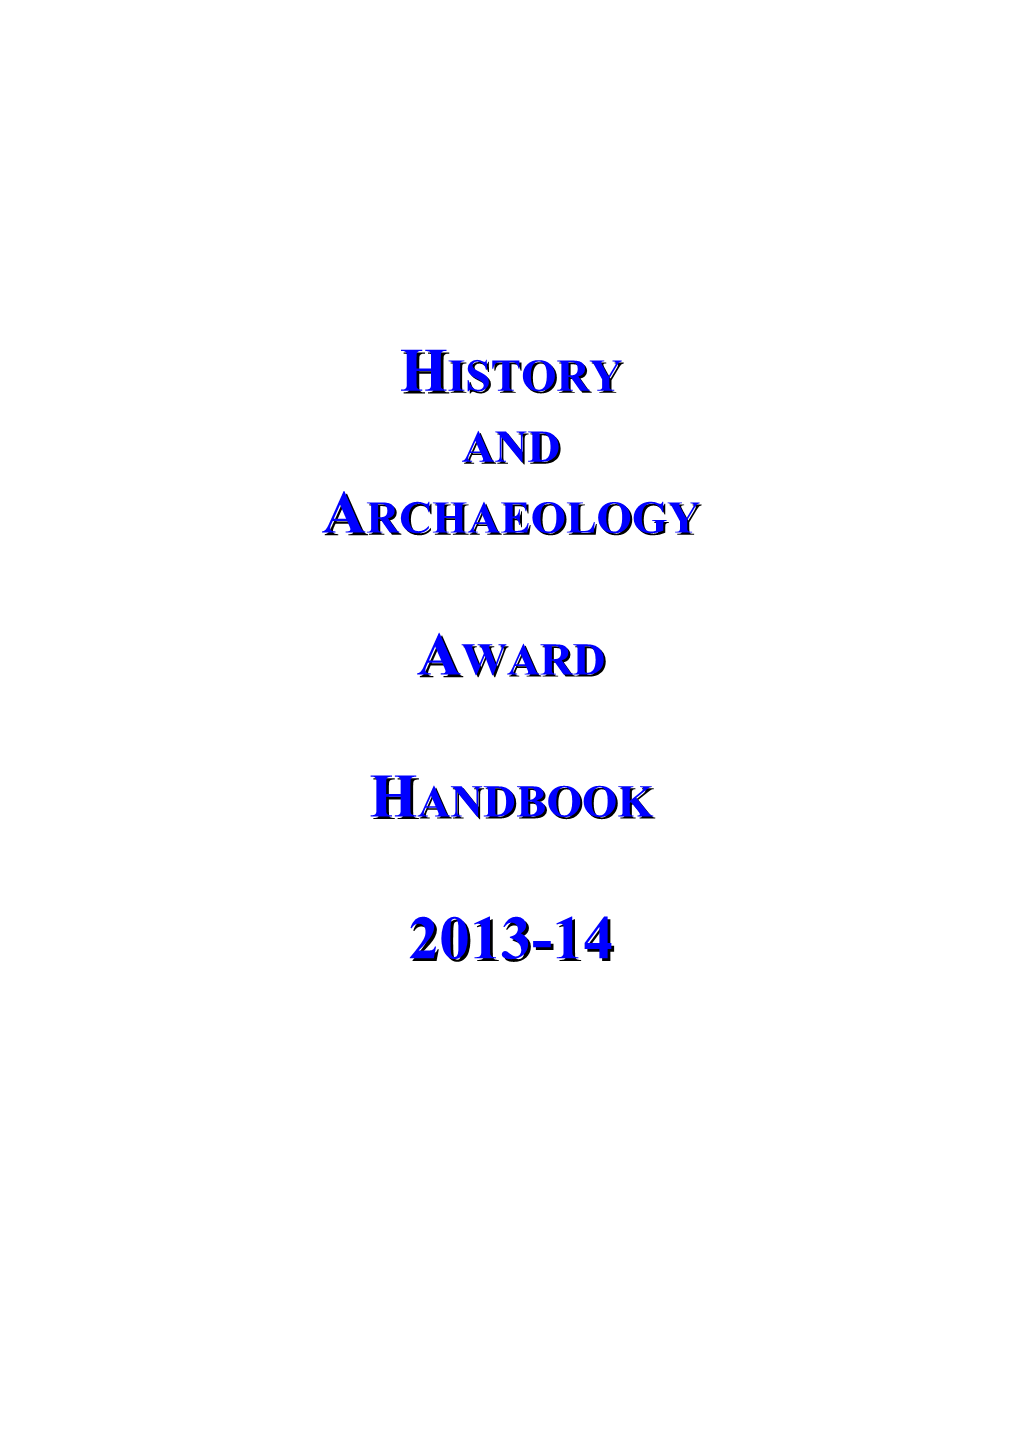 History and Archaeology Award Handbook2013-2014